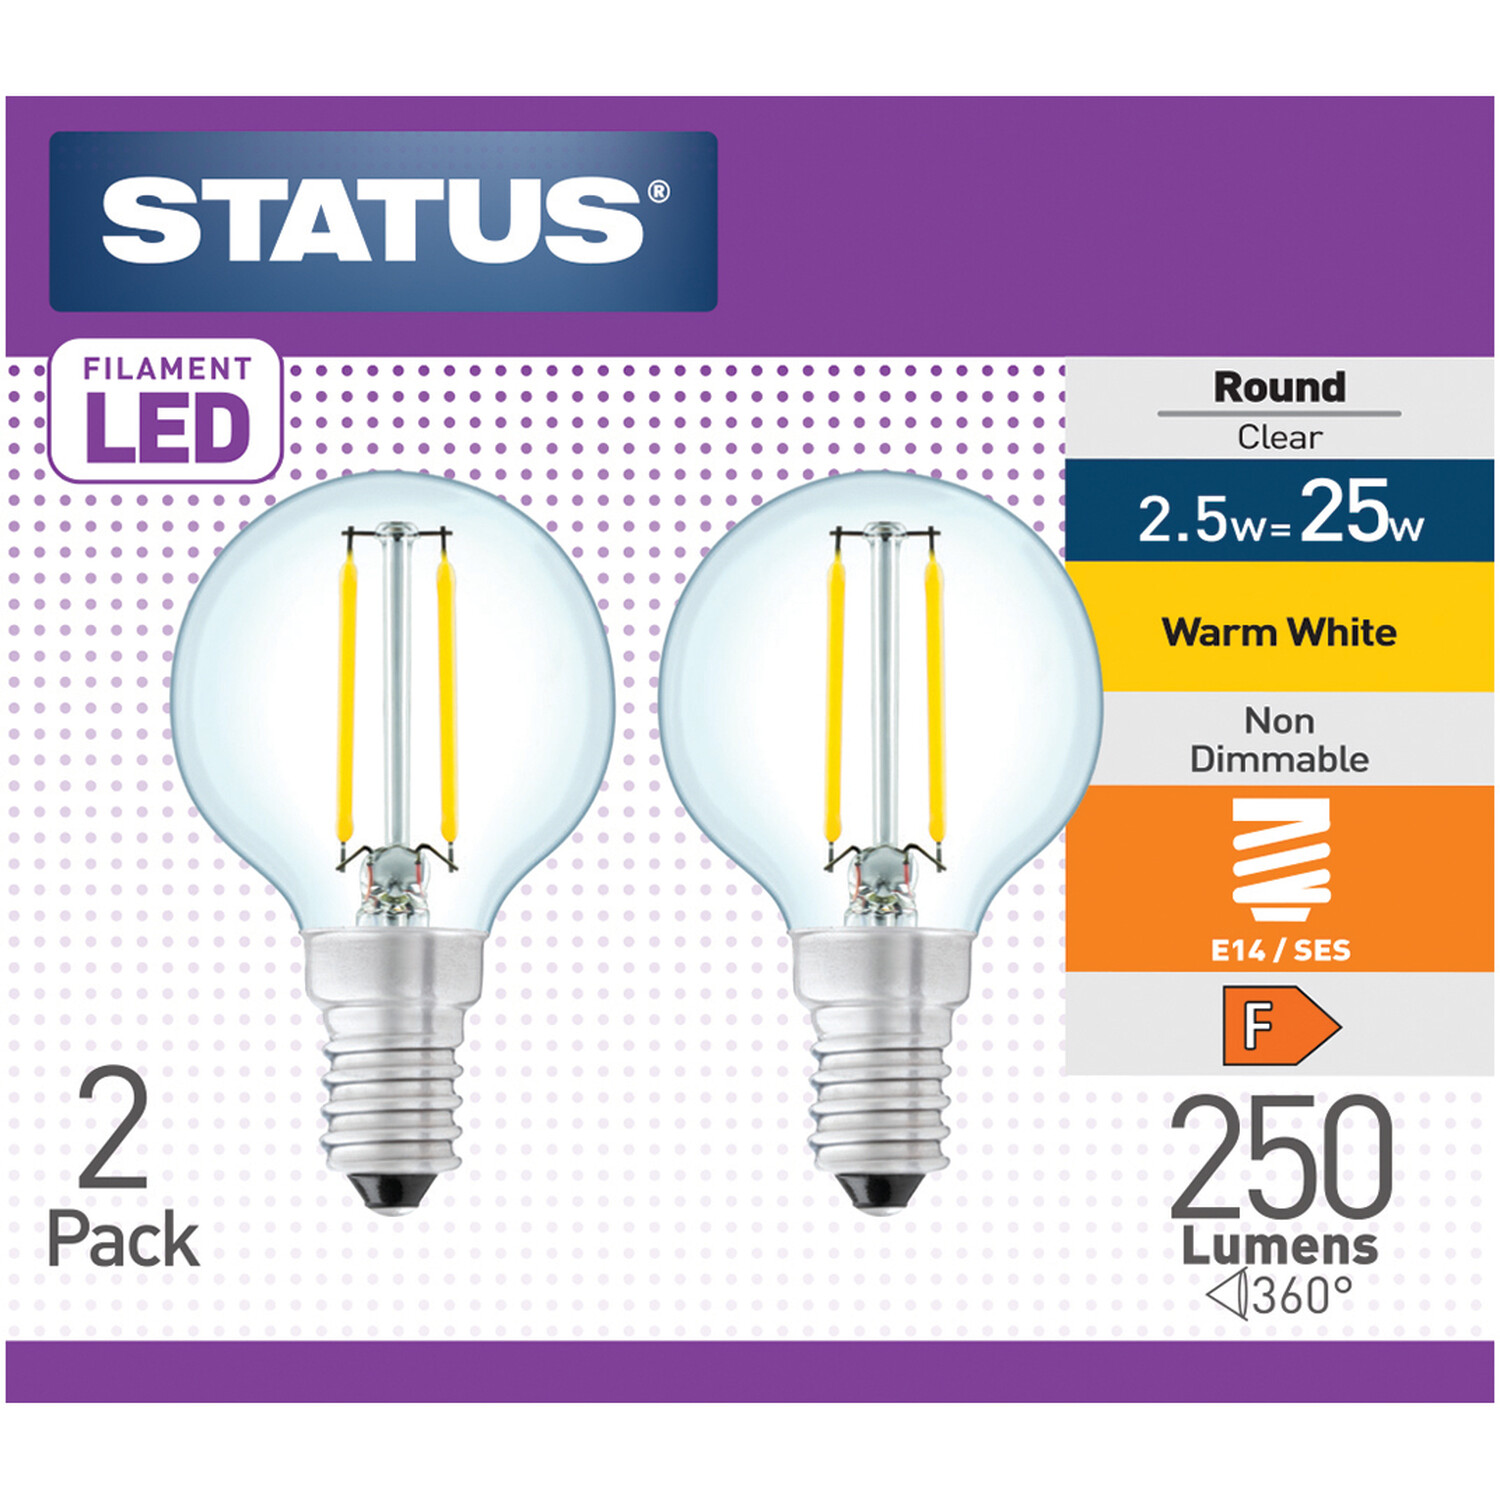 Pack of 2 Status Filament LED 2.5W Small Edison Screw Lightbulbs Image 1